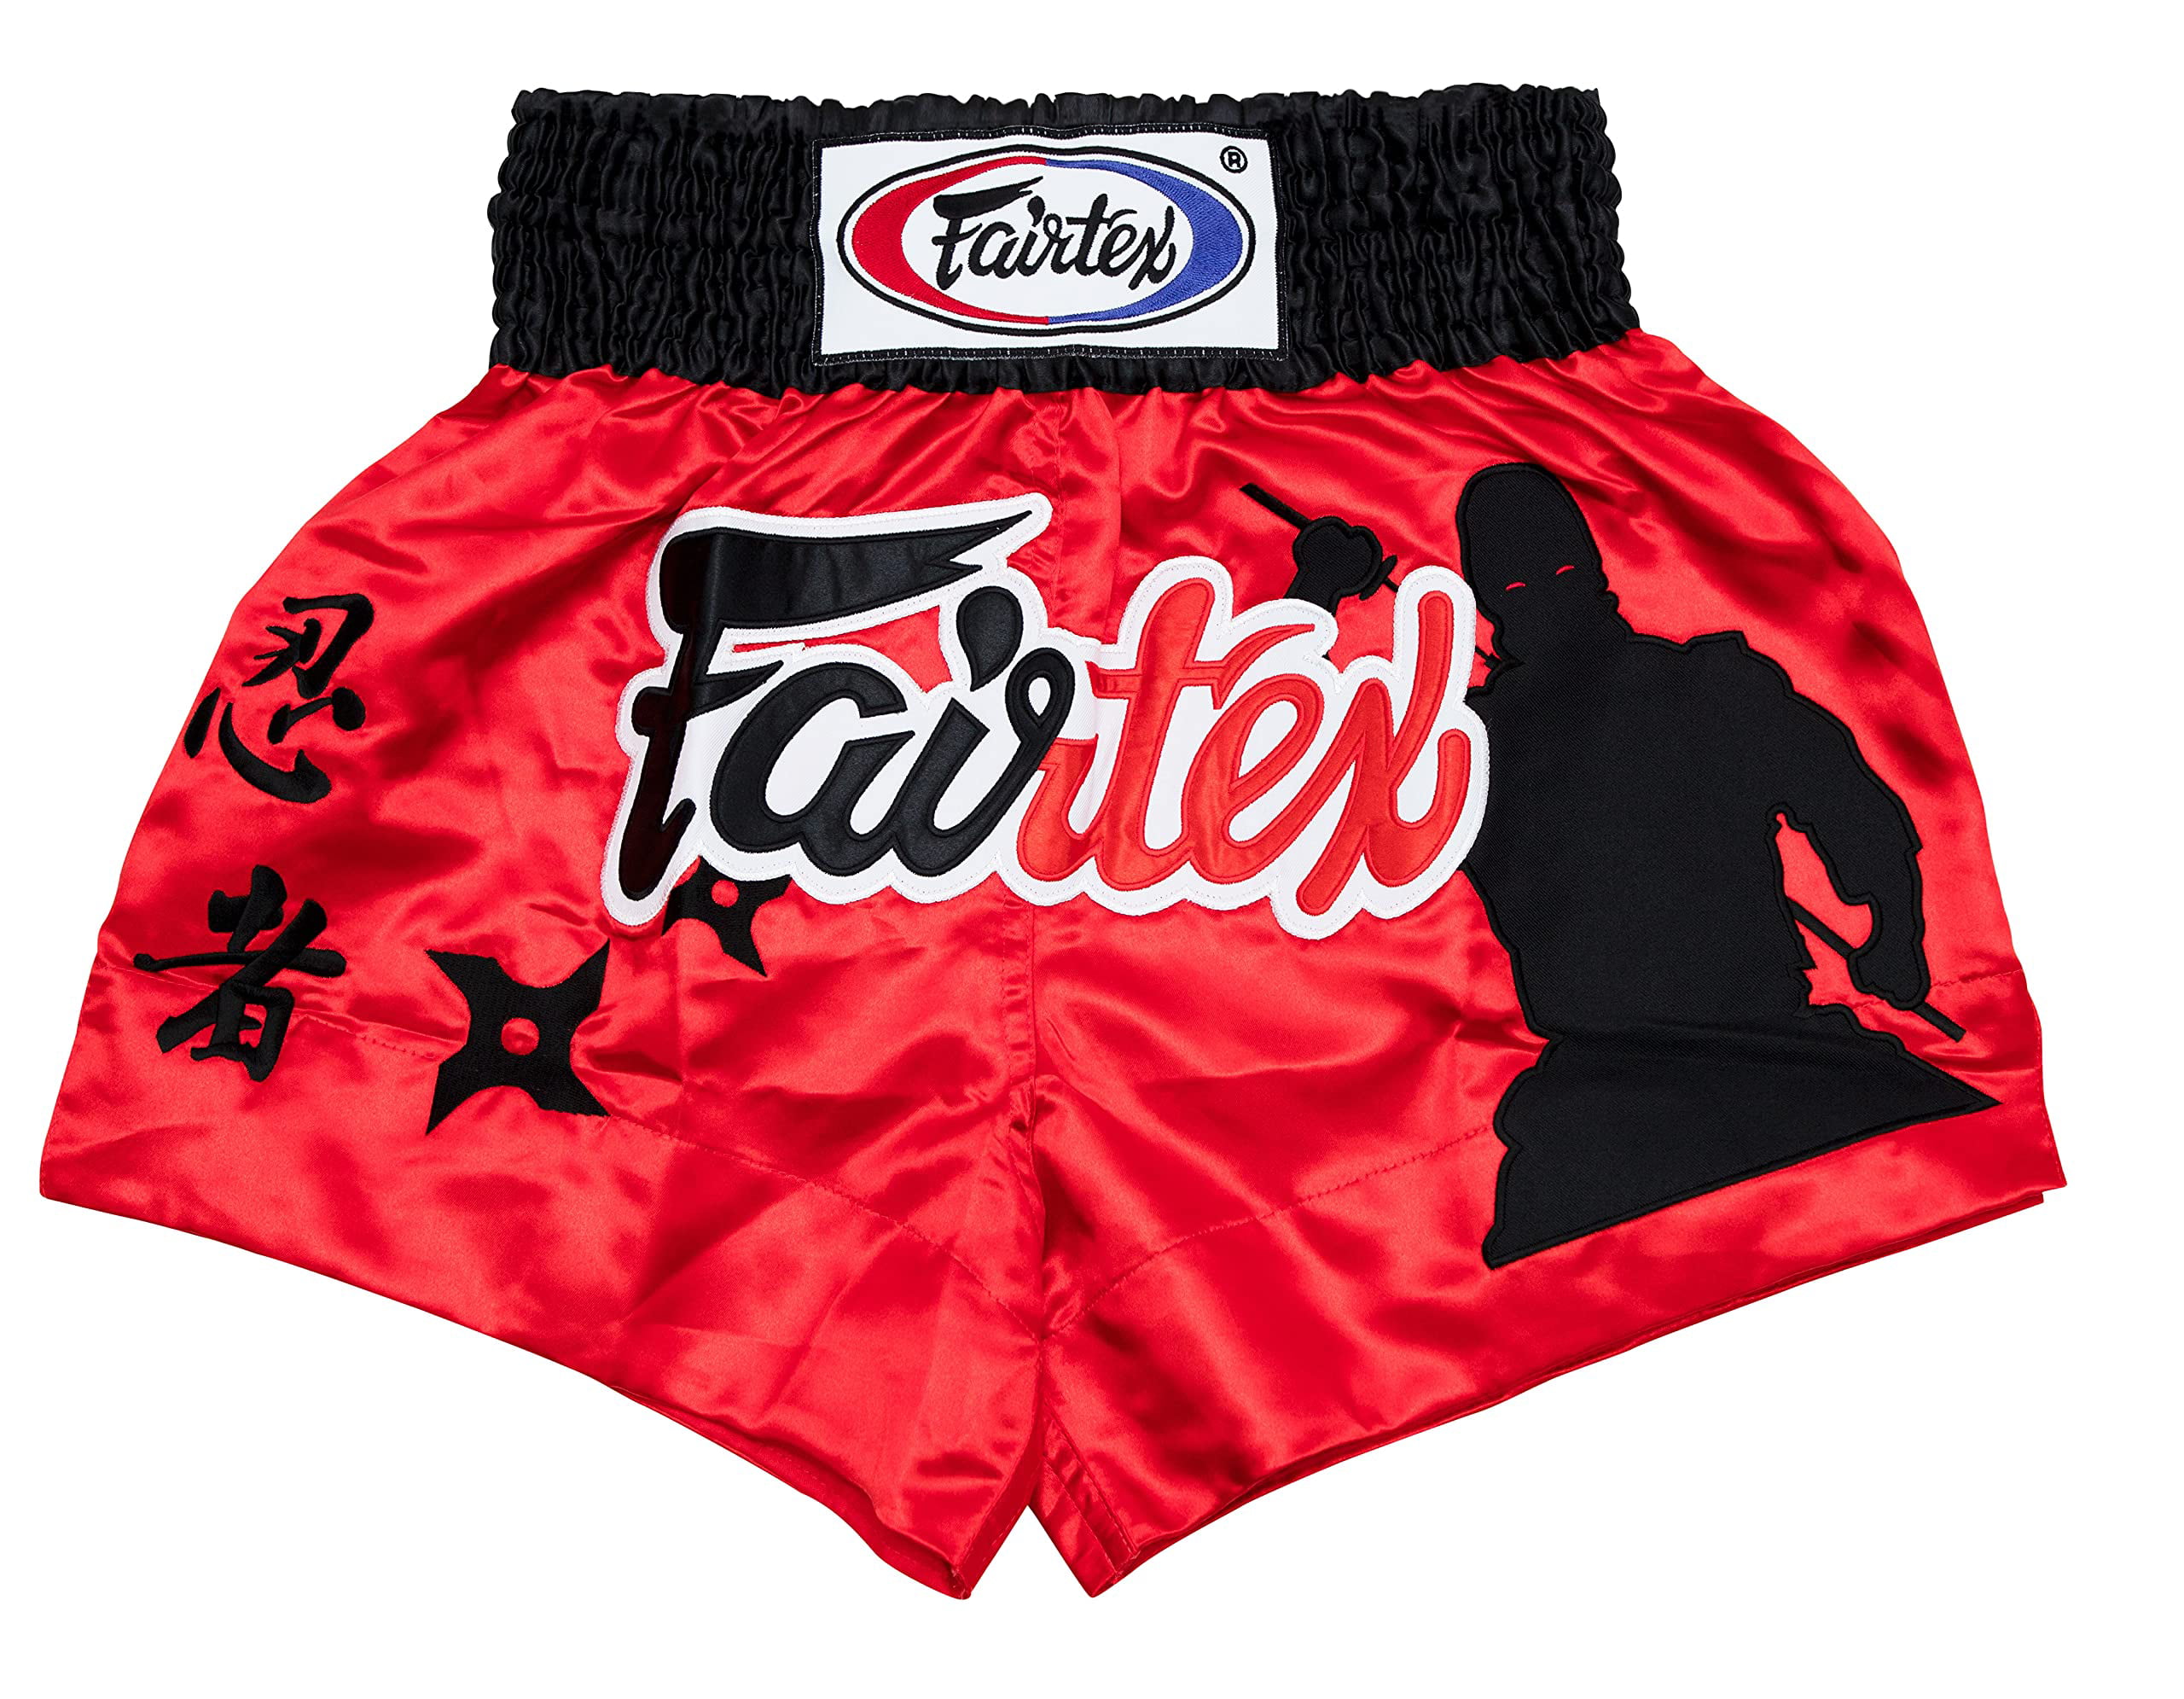 Fairtex Muay Thai Boxing Shorts Traditional Styles Authentic ...